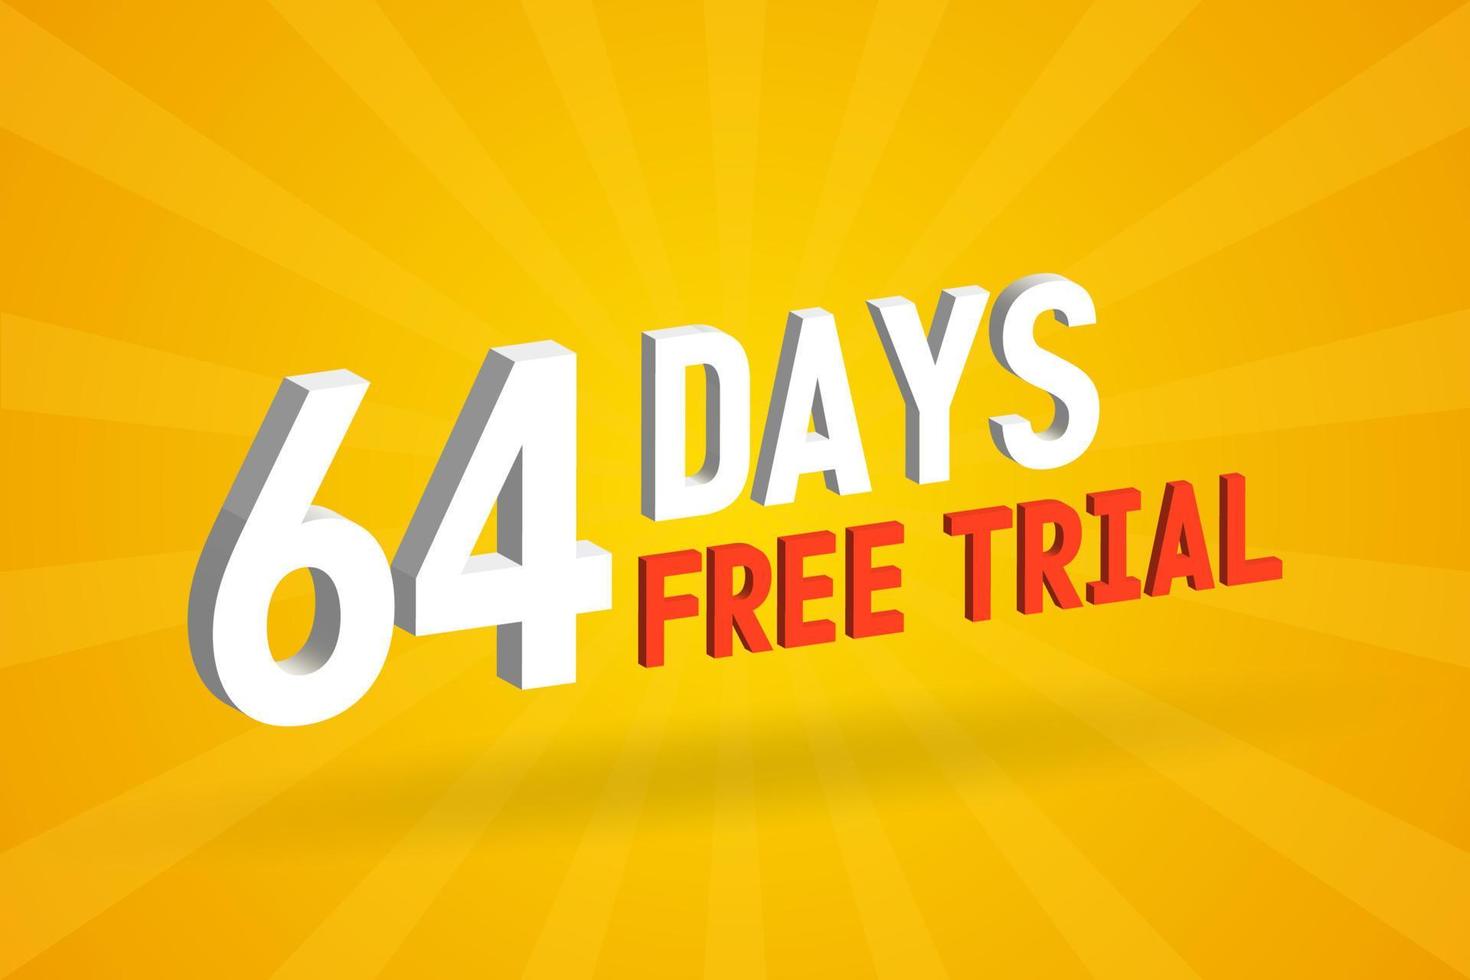 oferta gratuita 64 días de prueba gratuita texto 3d stock vector